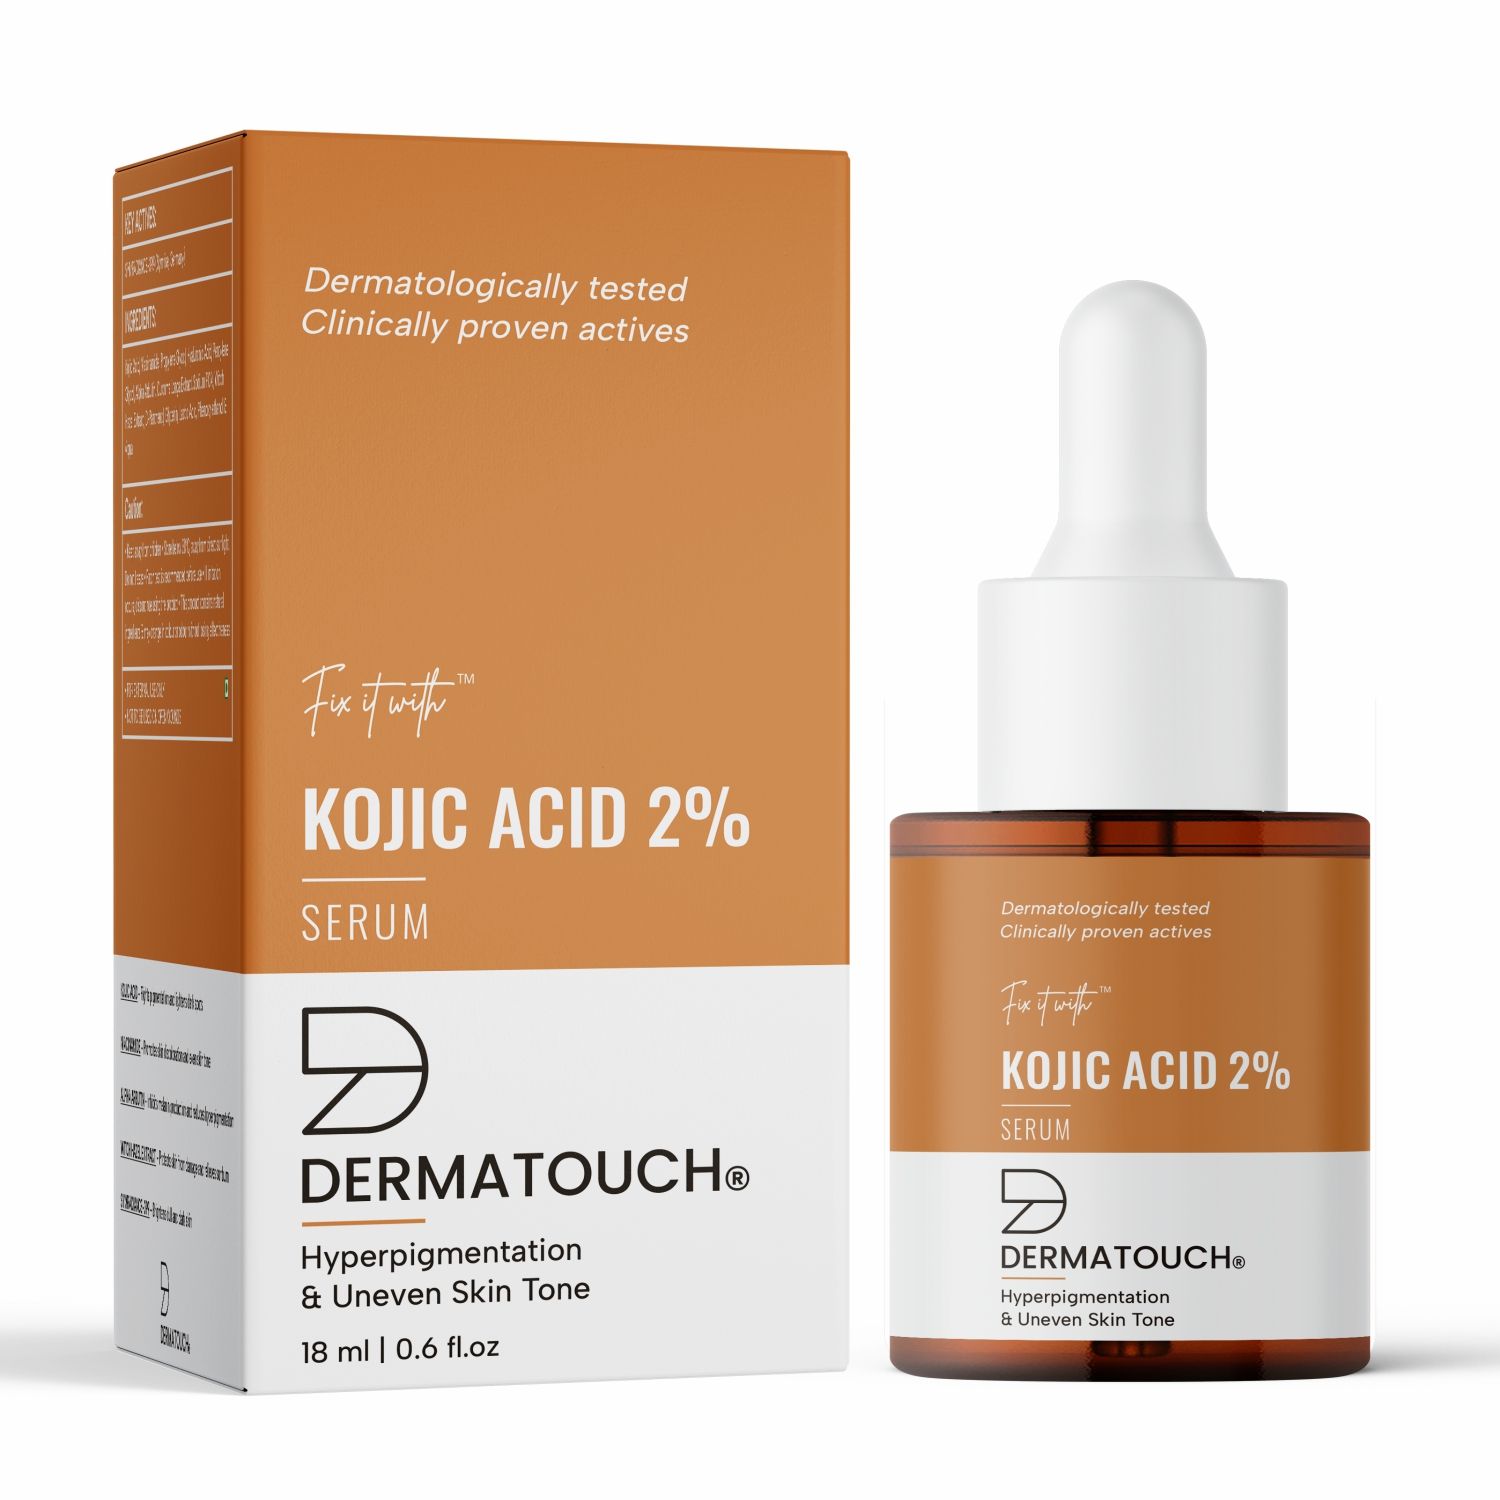 Buy DERMATOUCH Kojic Acid 2% Serum | Best For Hyperpigmentation & Uneven Skin Tone | For Both Men & Women | 18ml - Purplle